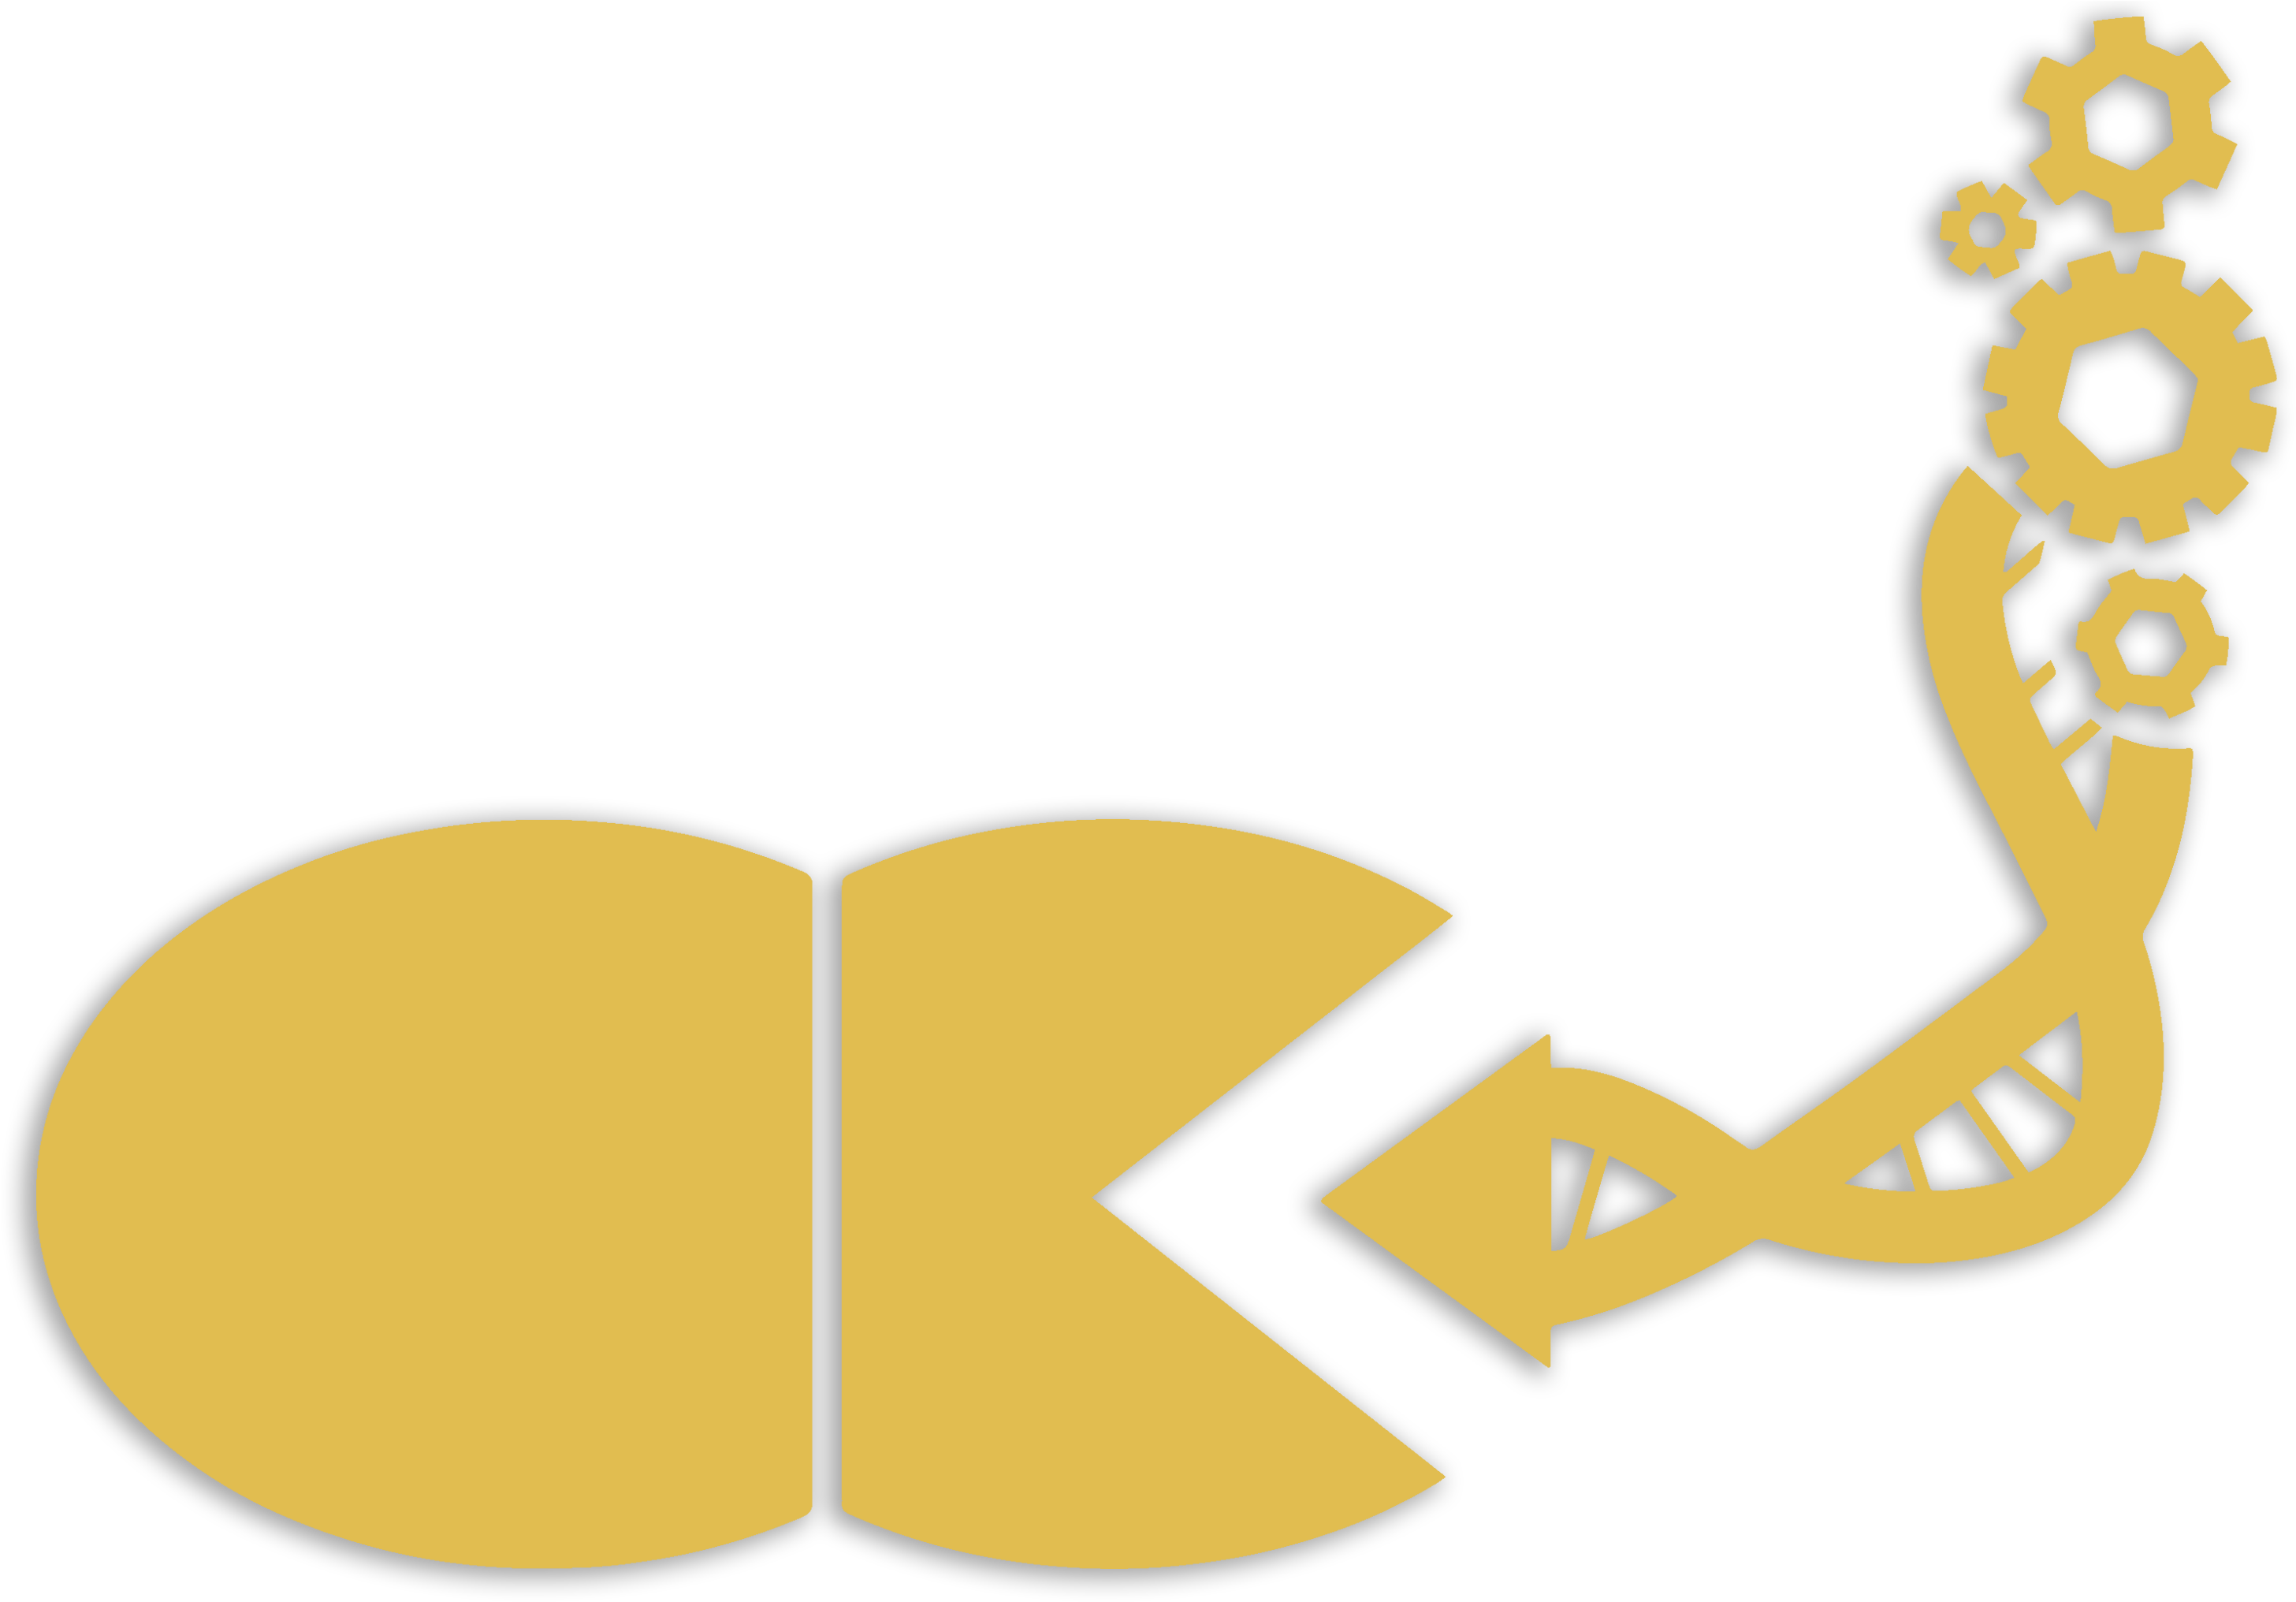 Pneumo Logo Of The Group - Jan-willem Veening (2928x2031)